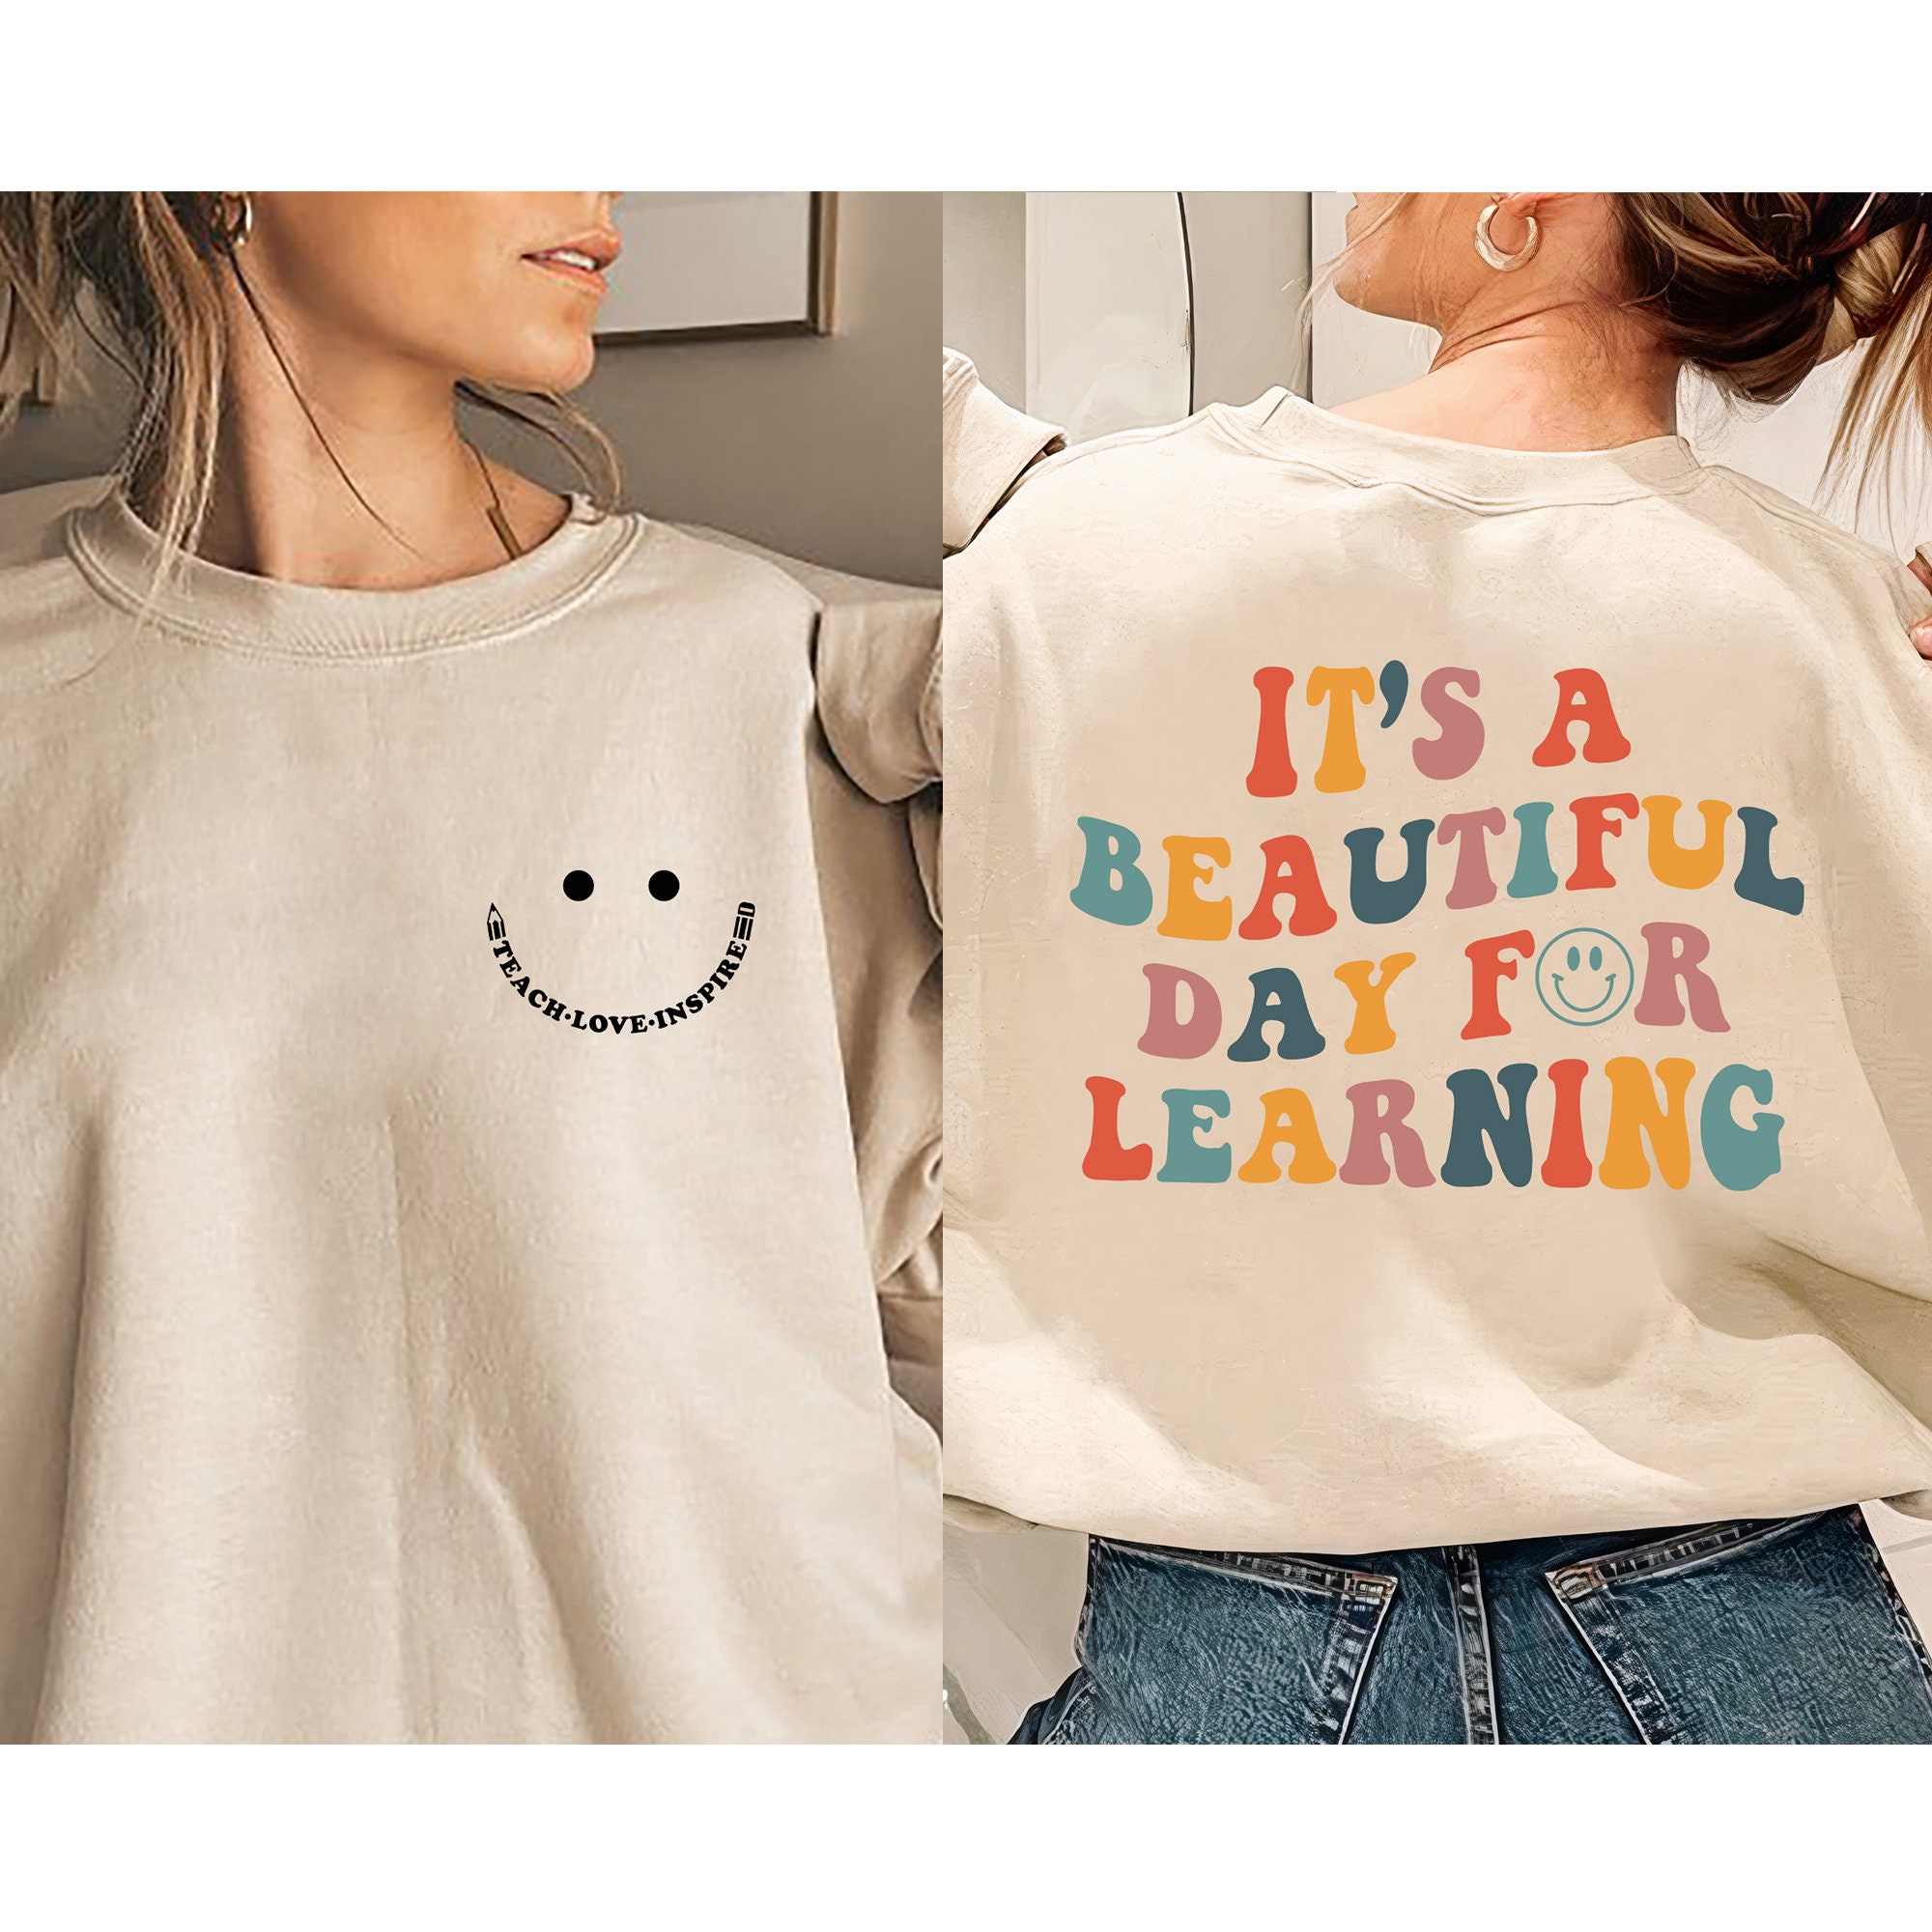 Kleding Dameskleding Hoodies & Sweatshirts Sweatshirts Back to School Teacher Gift LEARN Sweatshirt Teacher Shirt Teacher Sweatshirt LEARN Shirt 